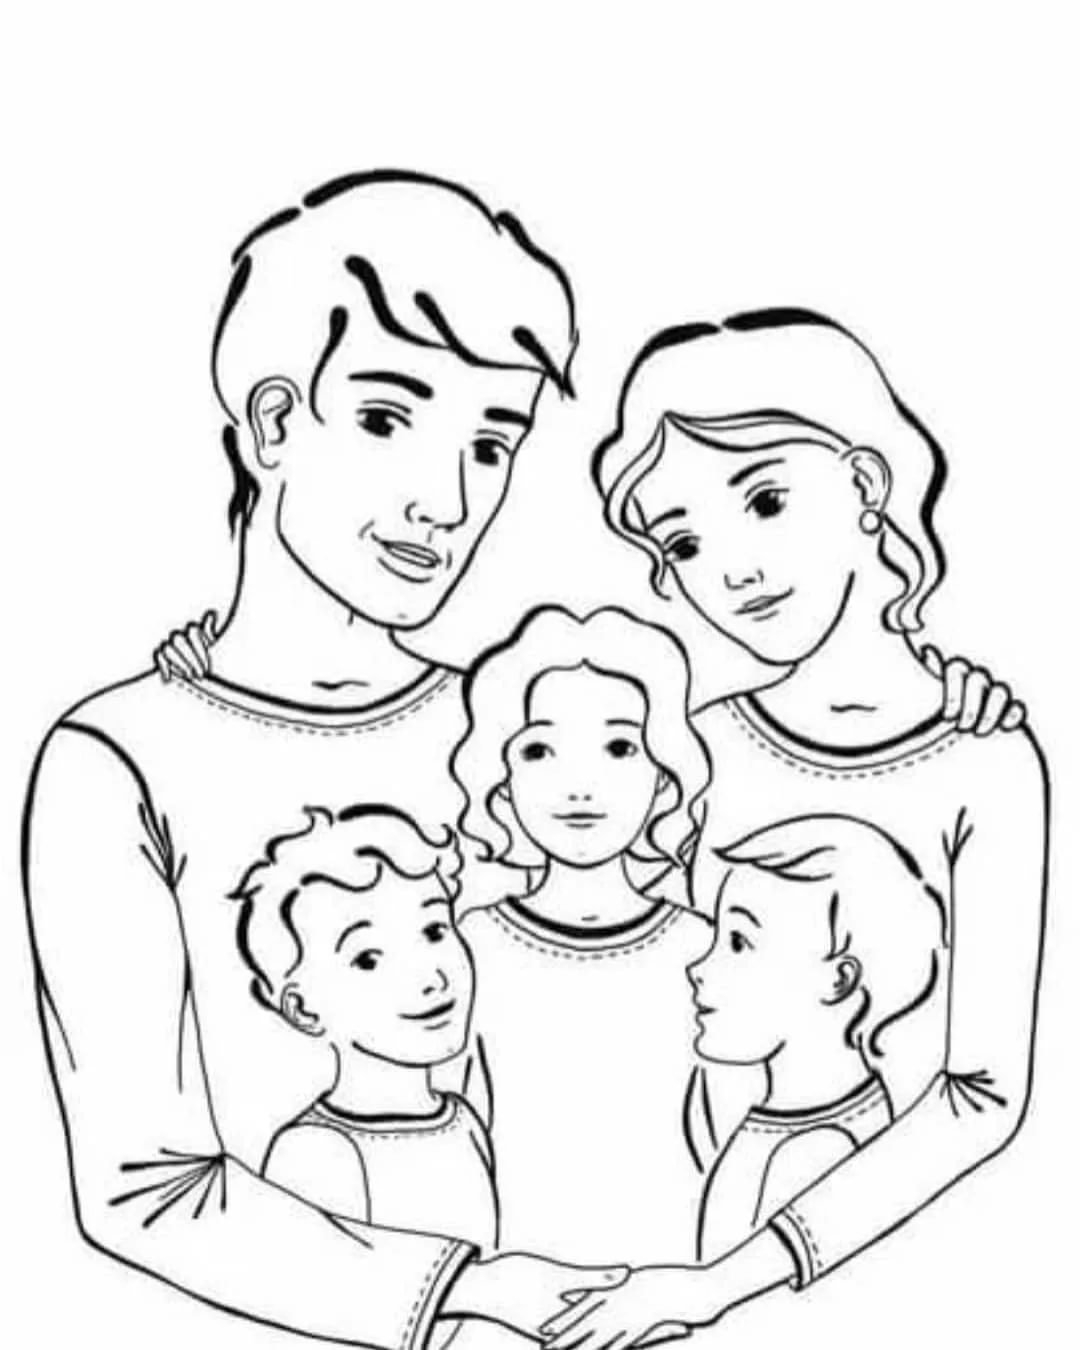 рисунок семьи карандашом легко и красиво